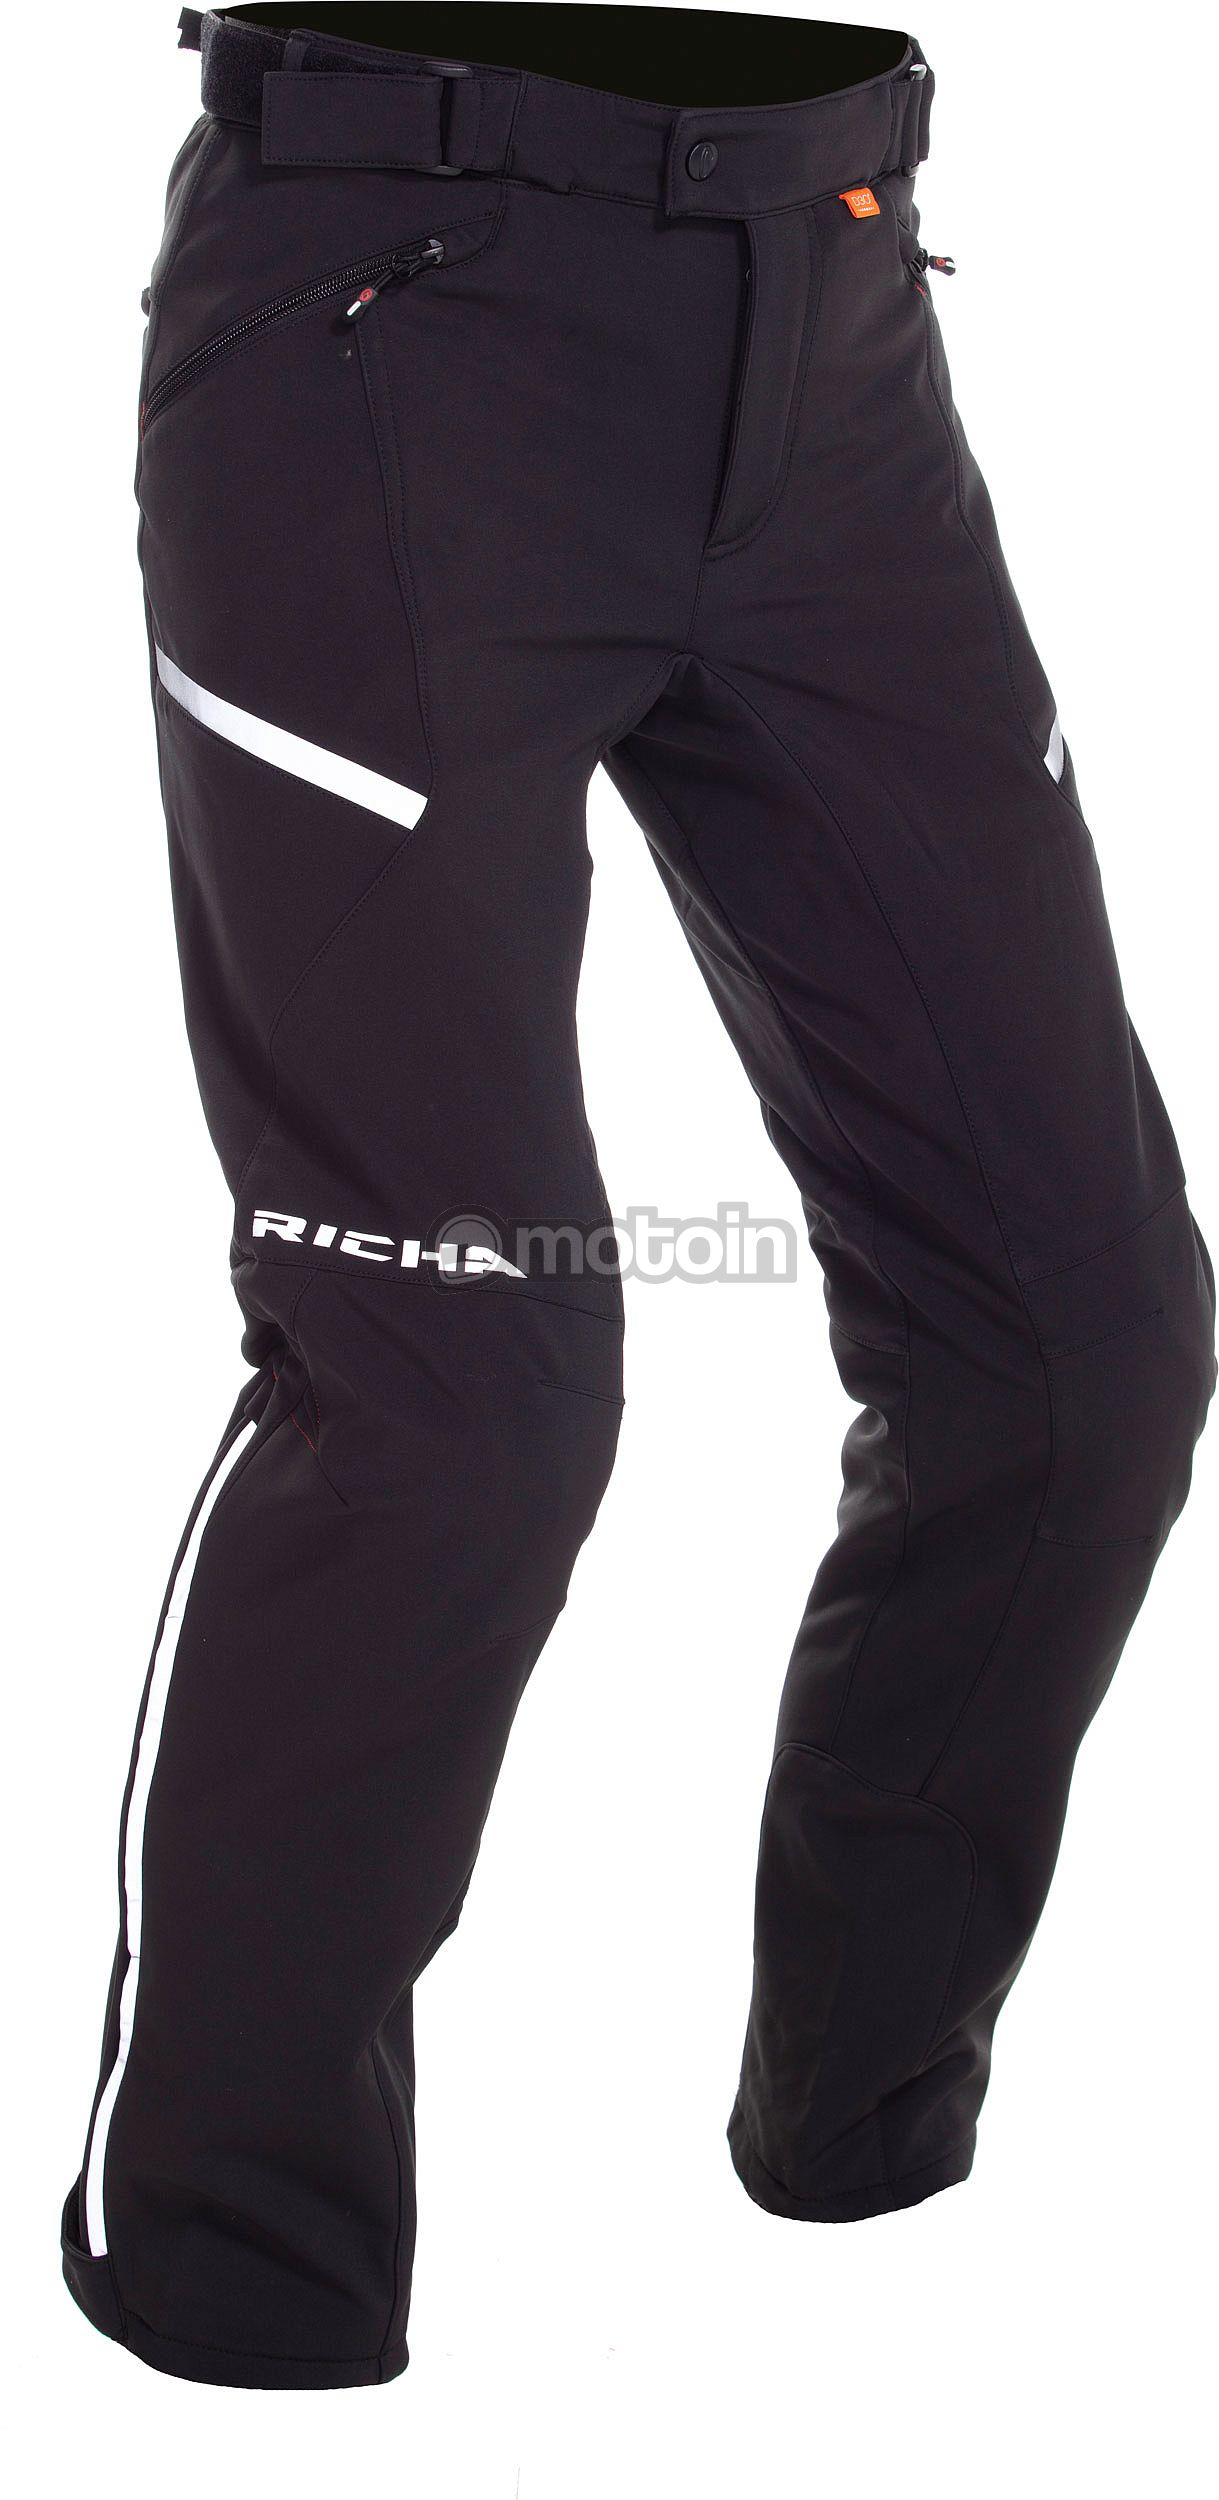 Richa Softshell, textile pants waterproof